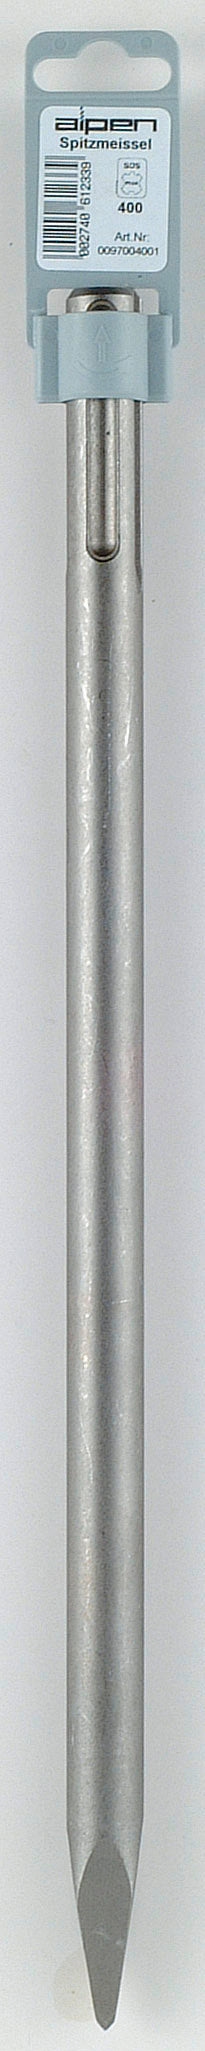 alpen-sds-max-chisel-pointed-400mm-alp97004001-1